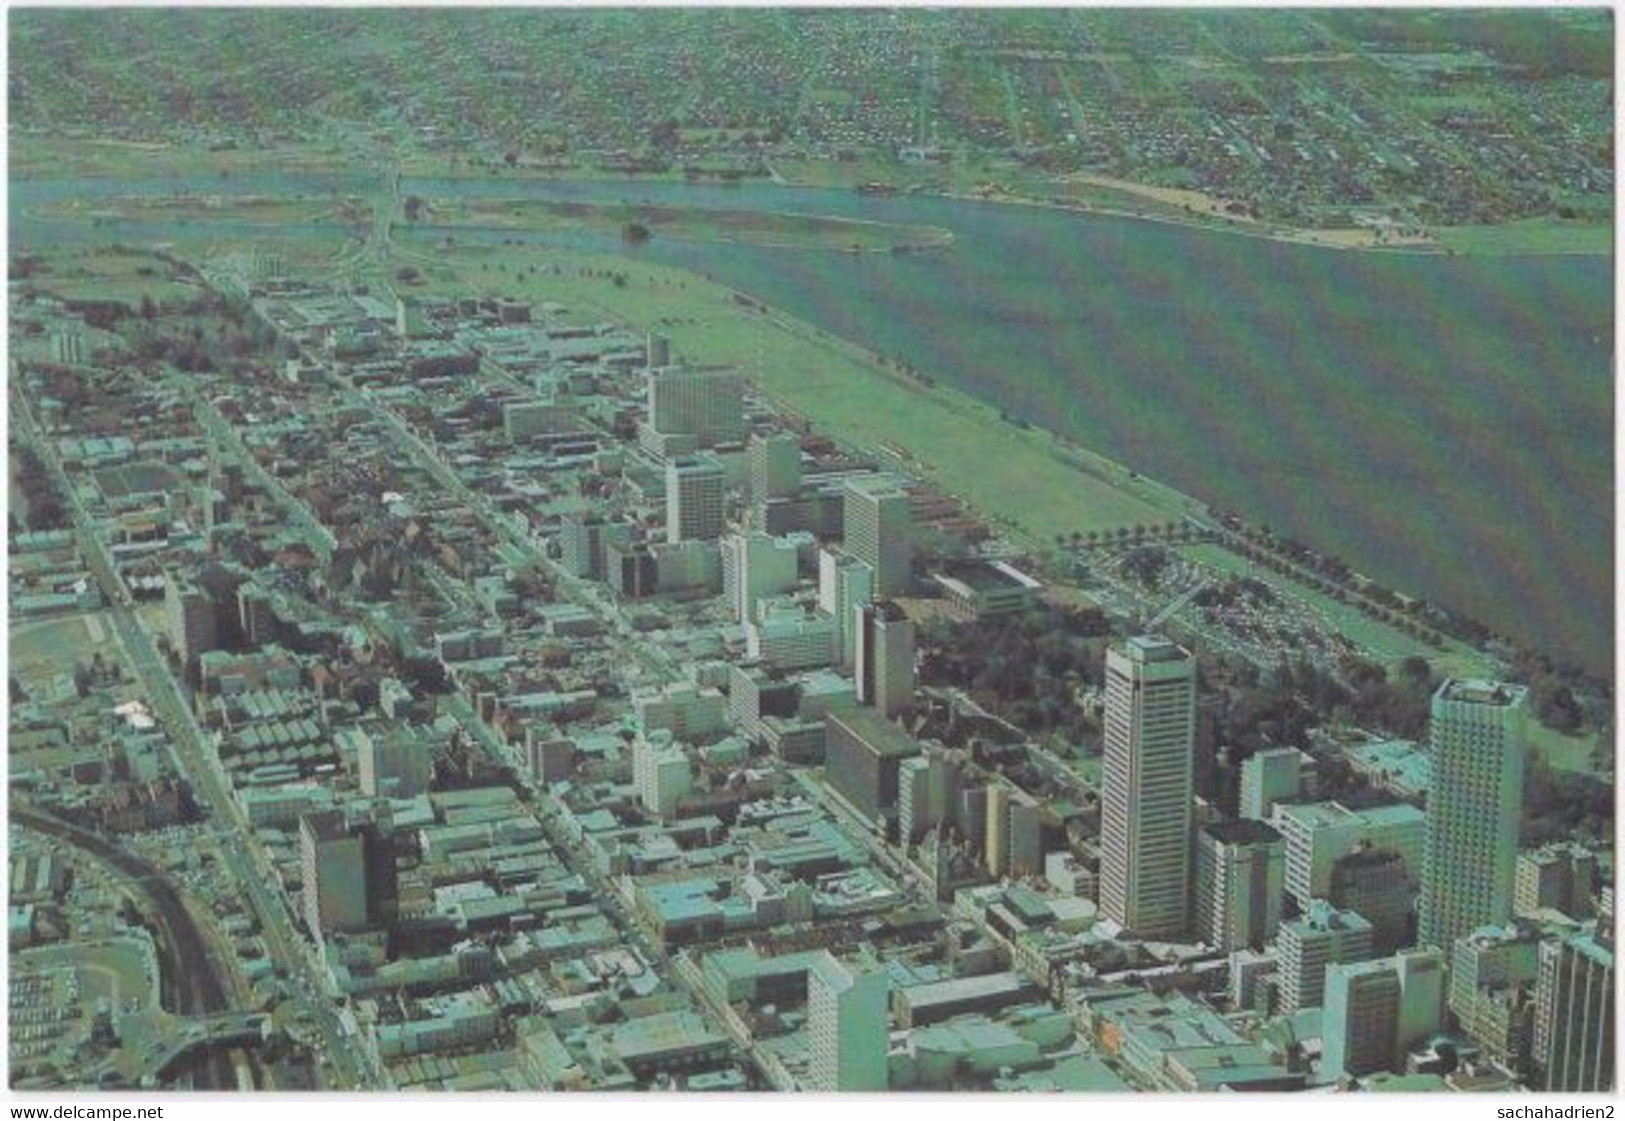 Pf. Aerial View Of PERTH. 7026-6 (2) - Perth